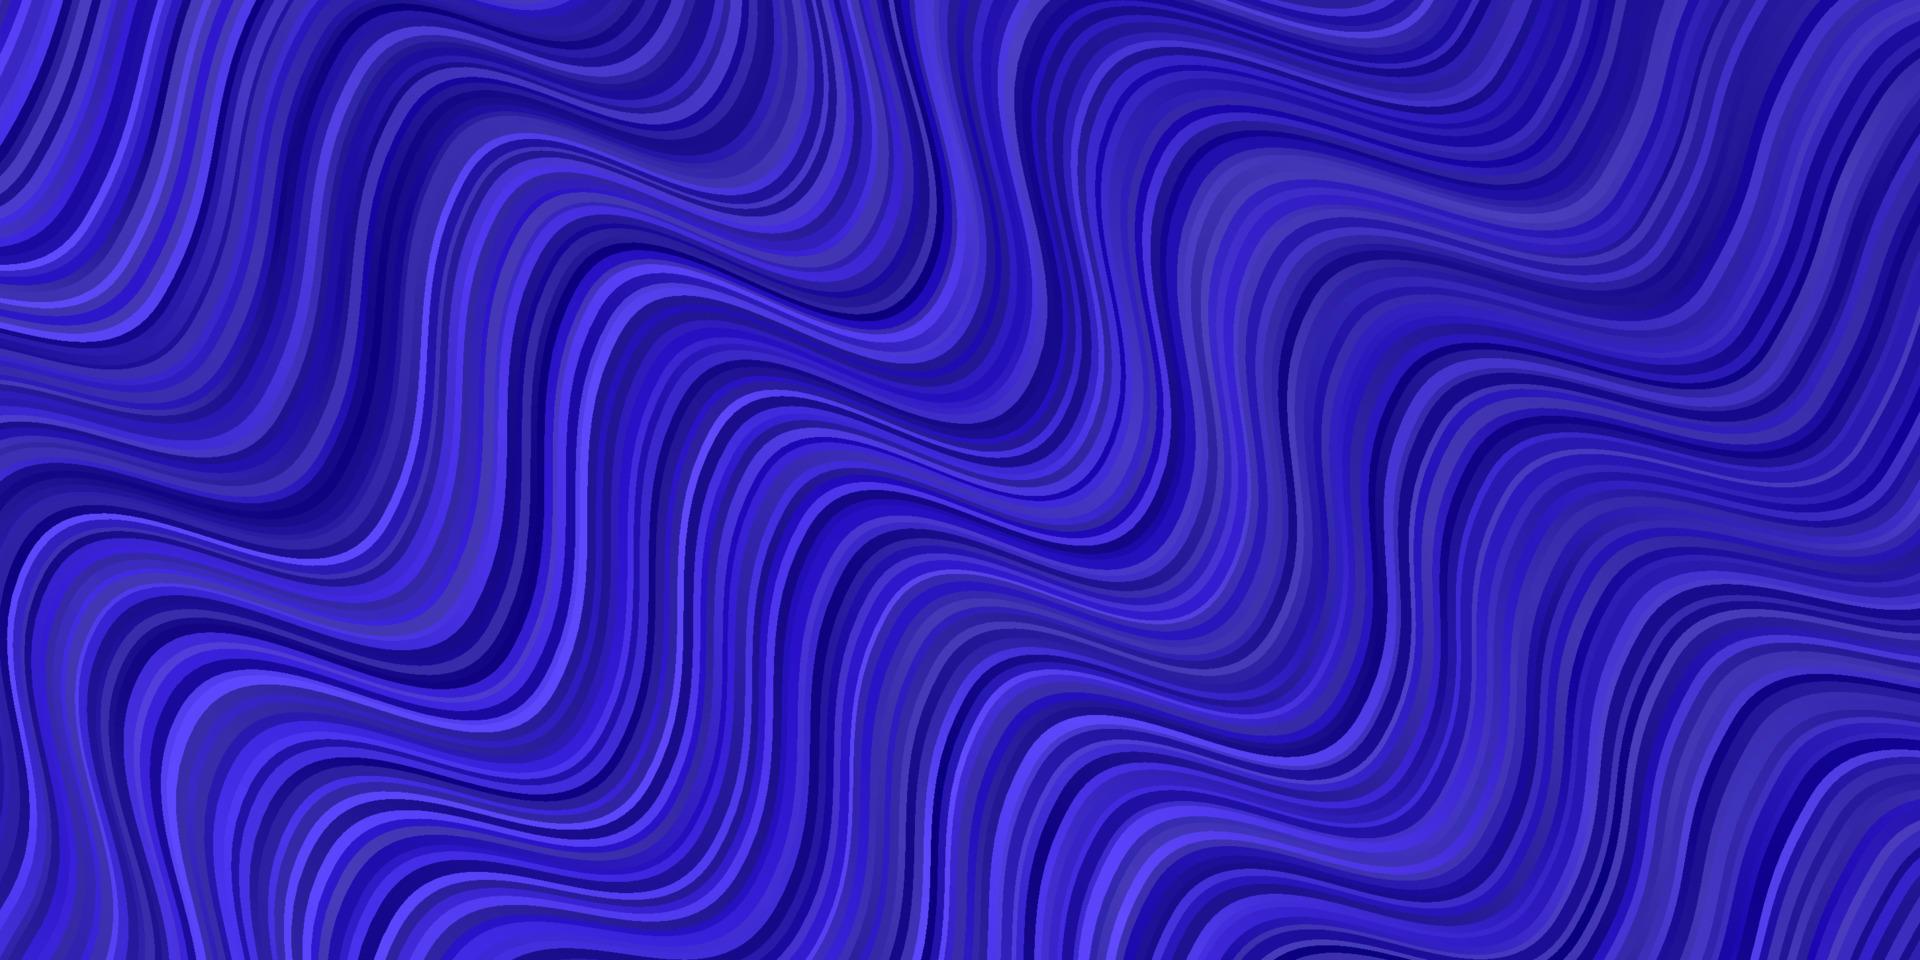 hellviolettes Vektormuster mit gekrümmten Linien. vektor